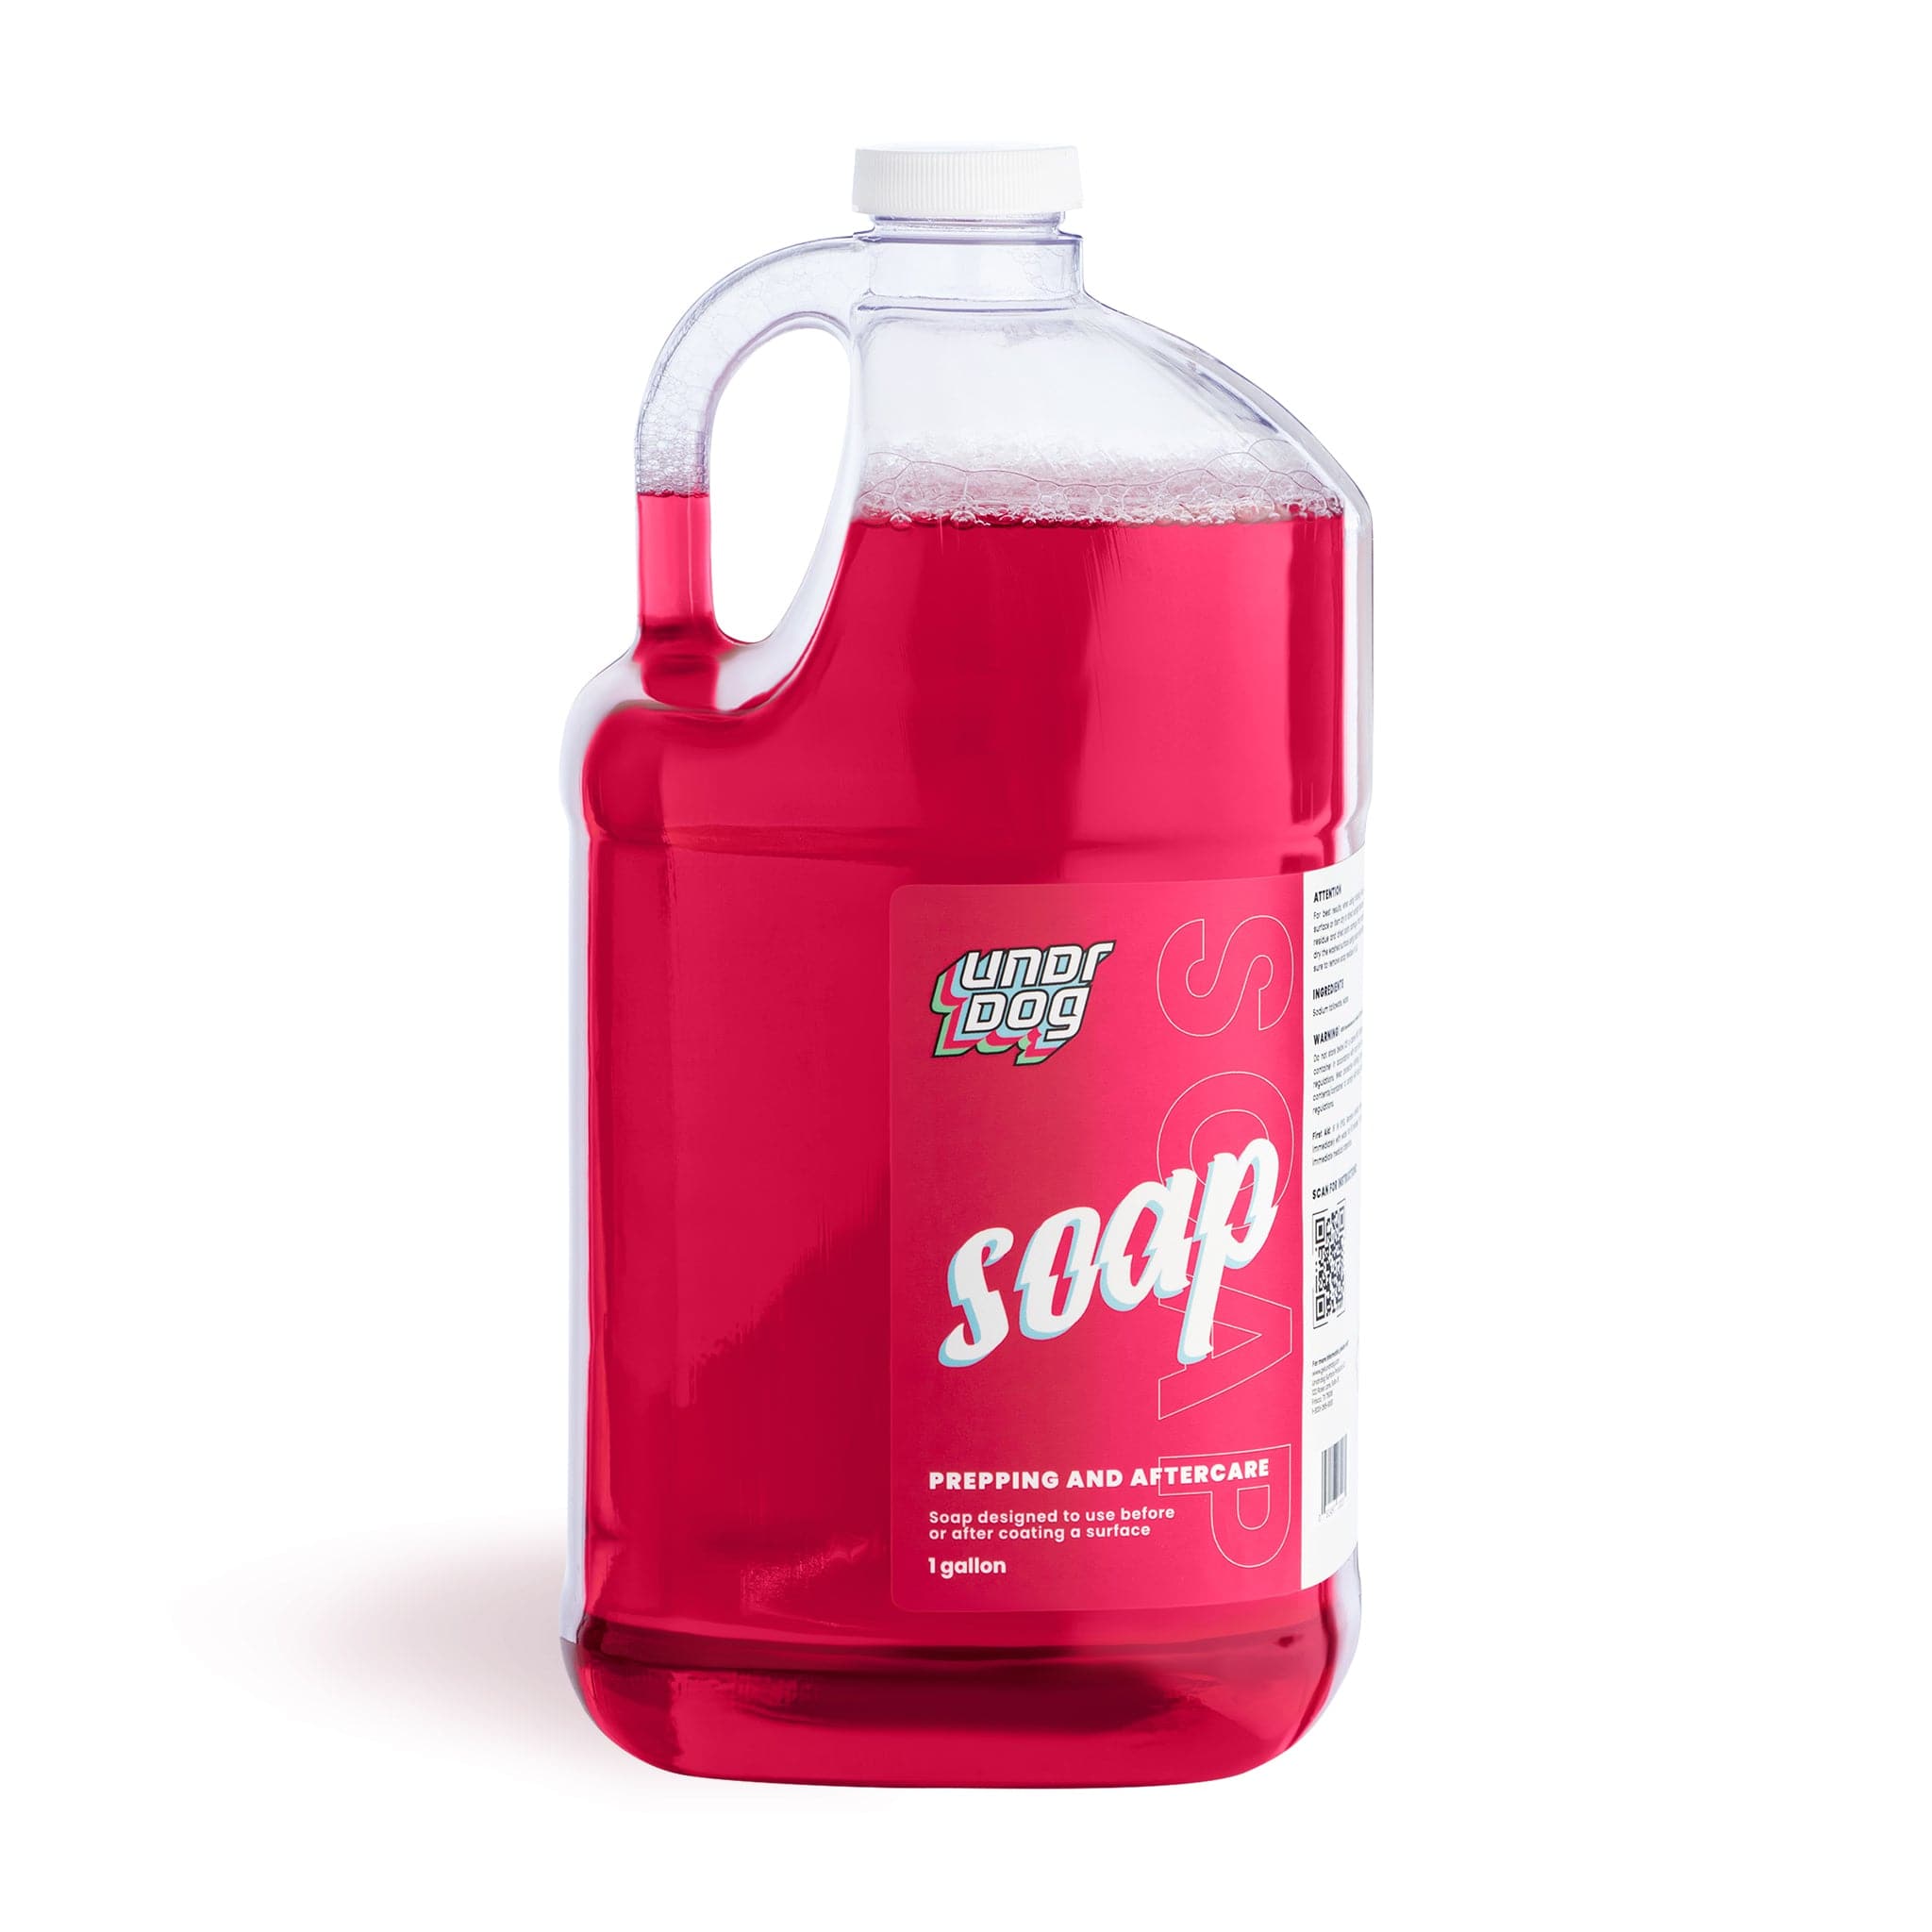 Spardiant Quartz Wash Car Shampoo – pH Neutral Car Soap - Car